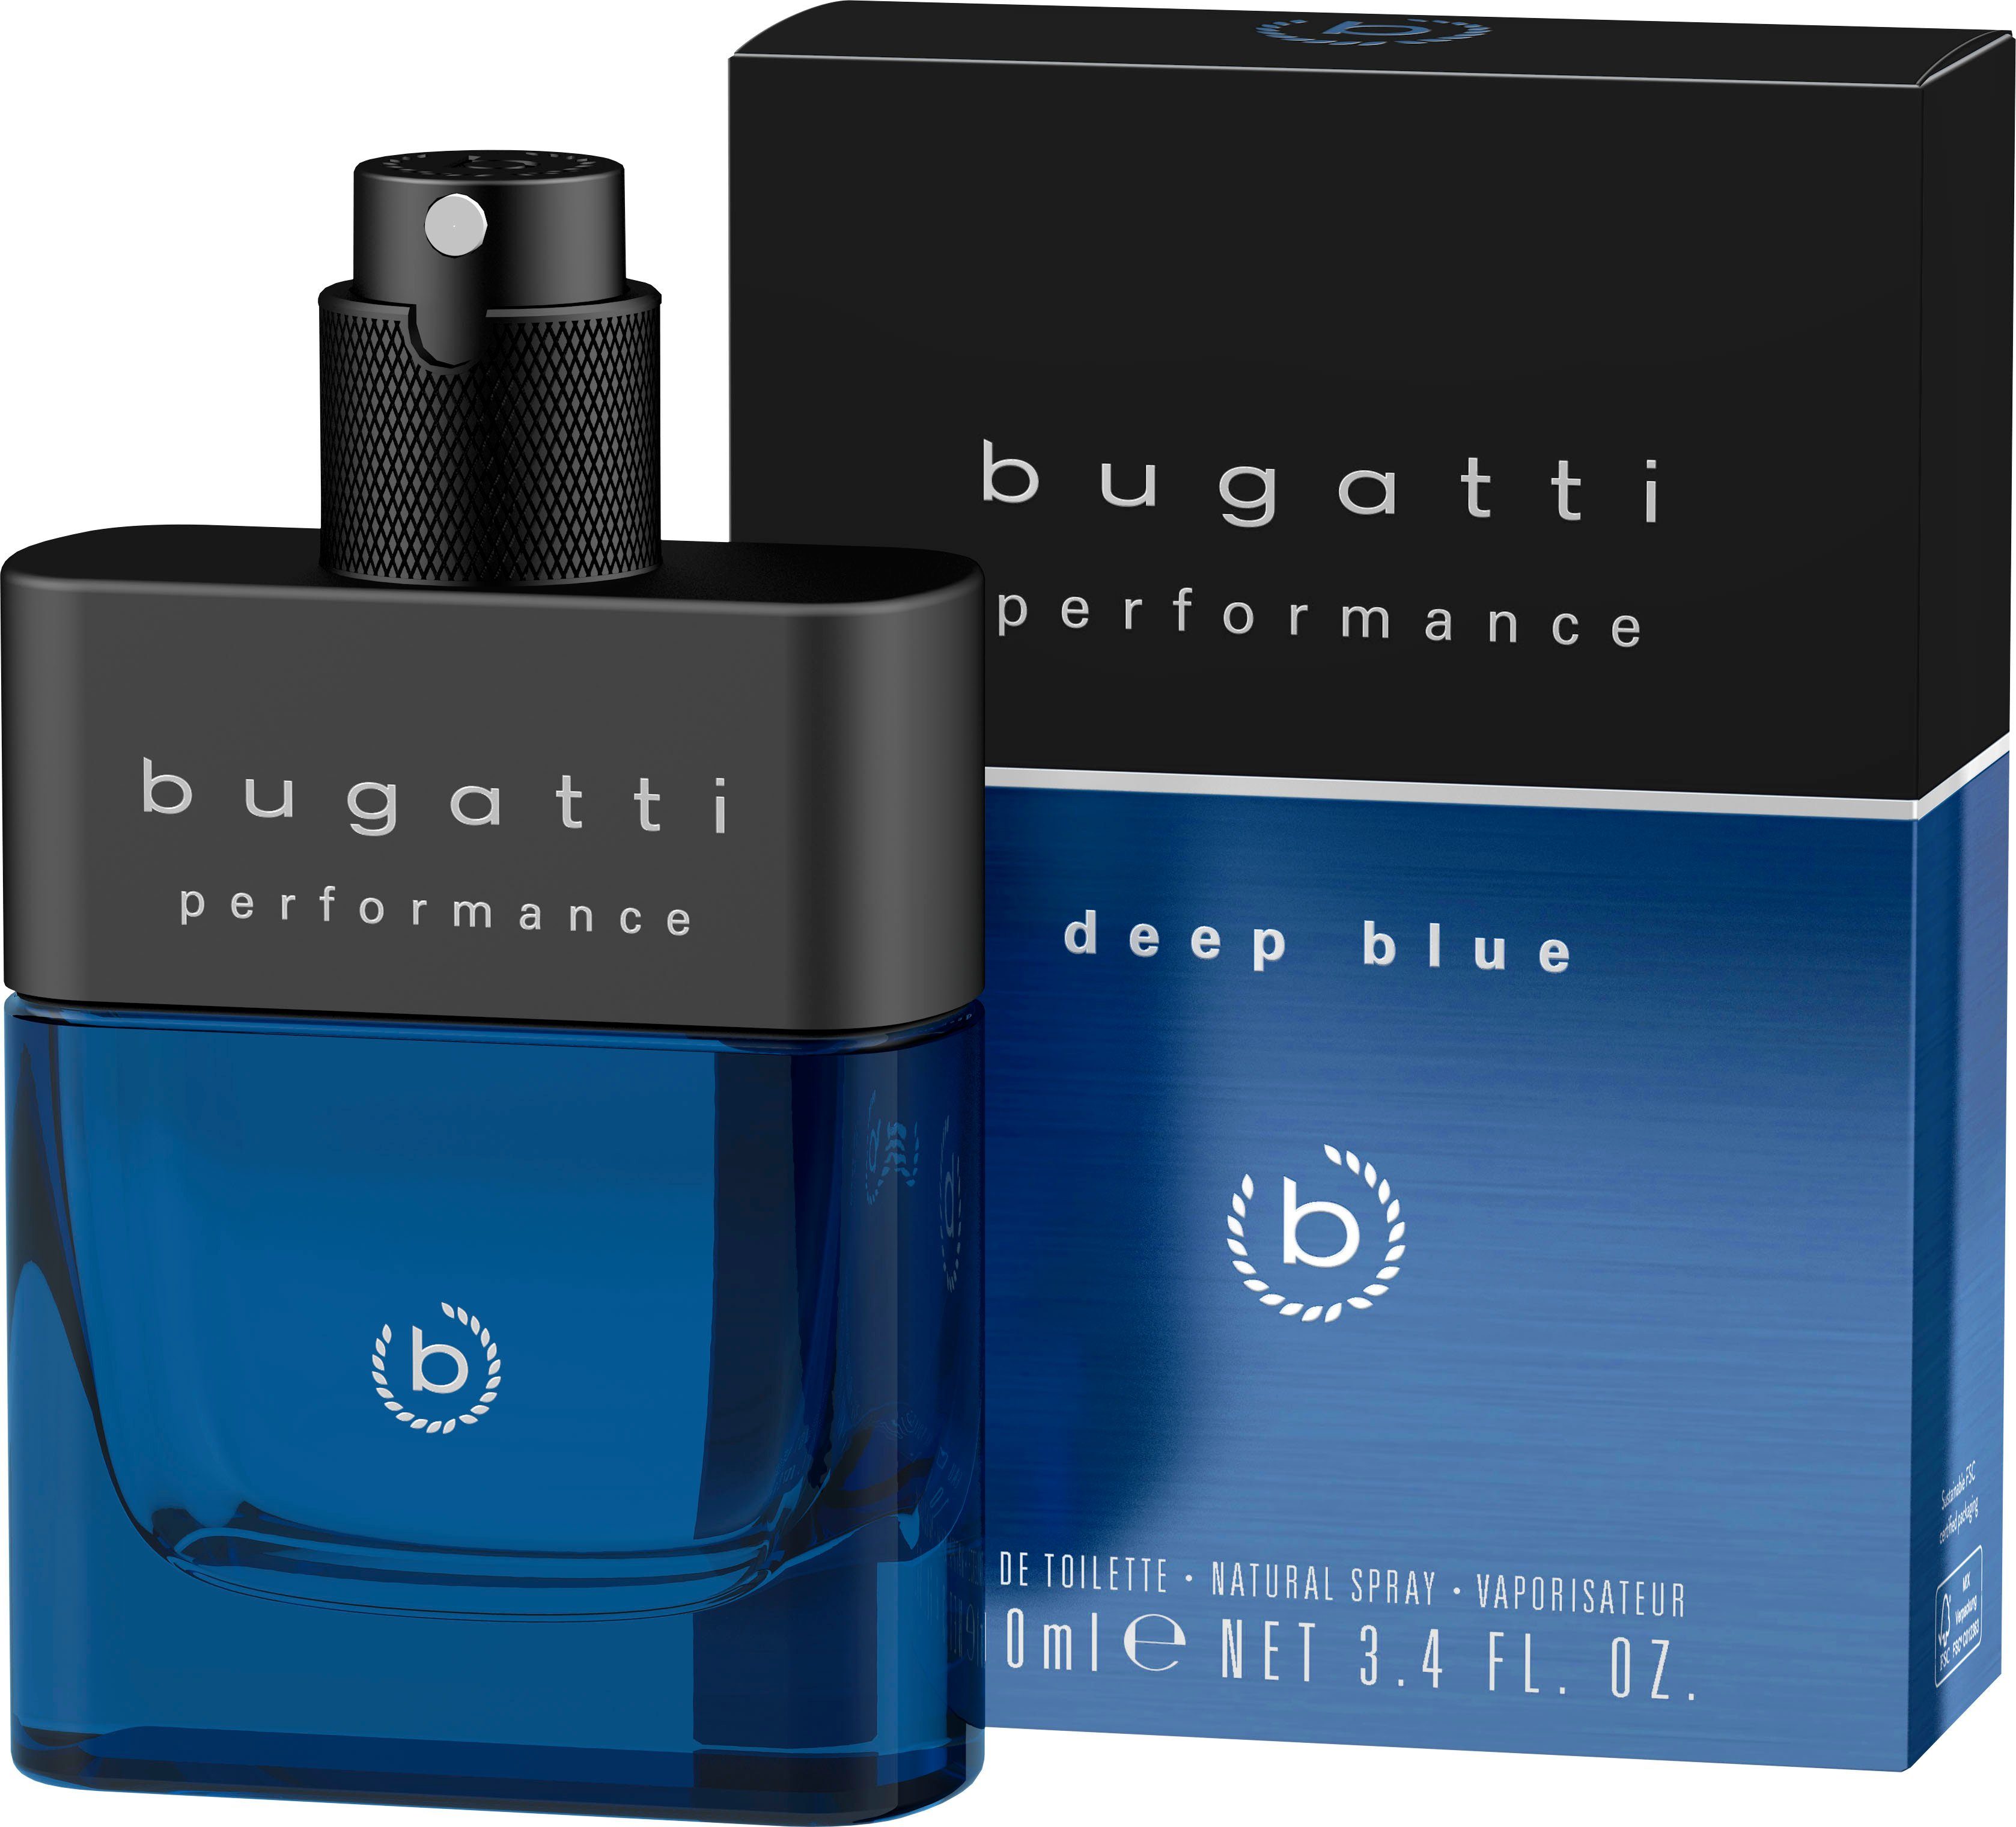 bugatti Eau de Toilette 100ml Deep Performance BUGATTI Blue EdT